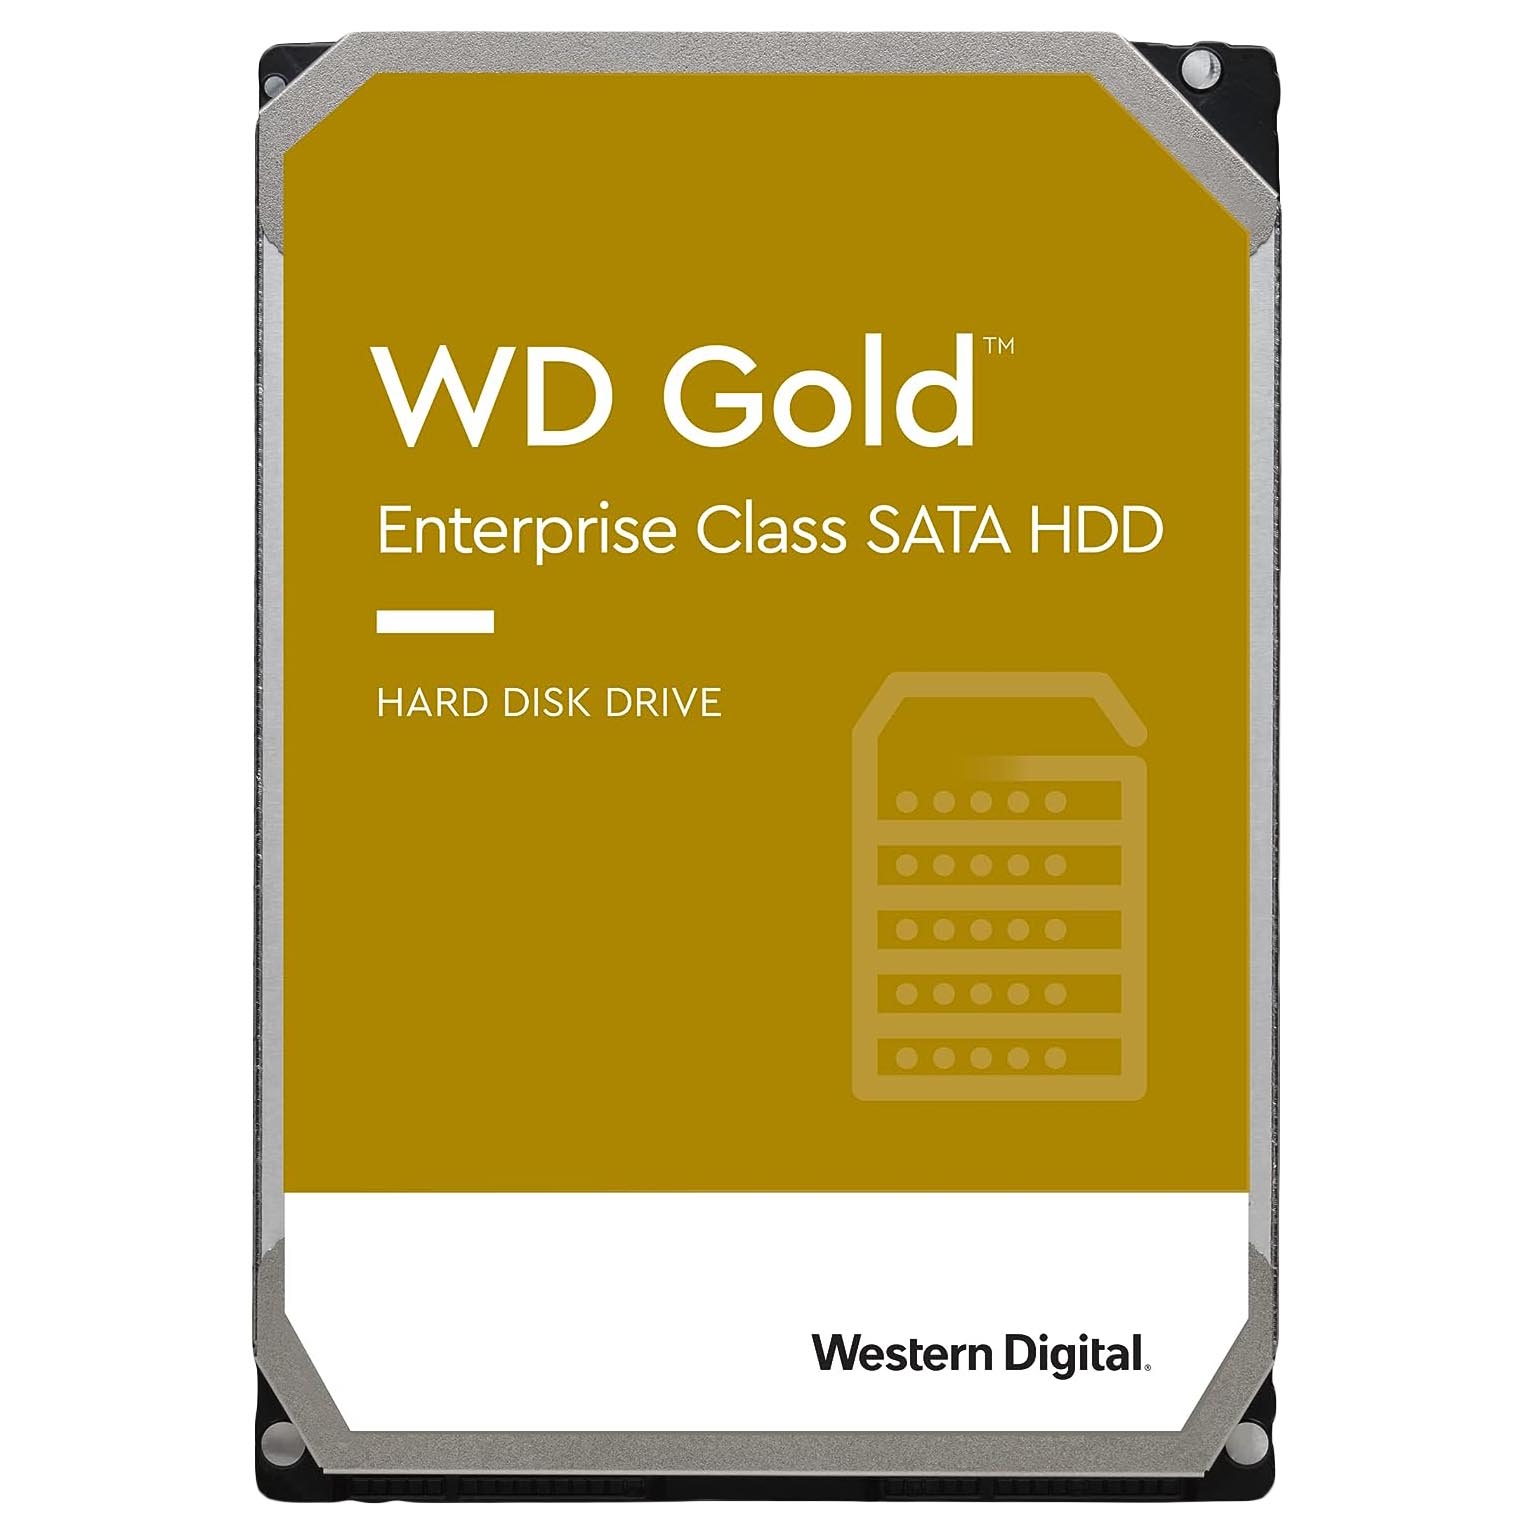 цена Внутренний жесткий диск Western Digital WD Gold Enterprise Class, WD4003VRYZ, 4Тб